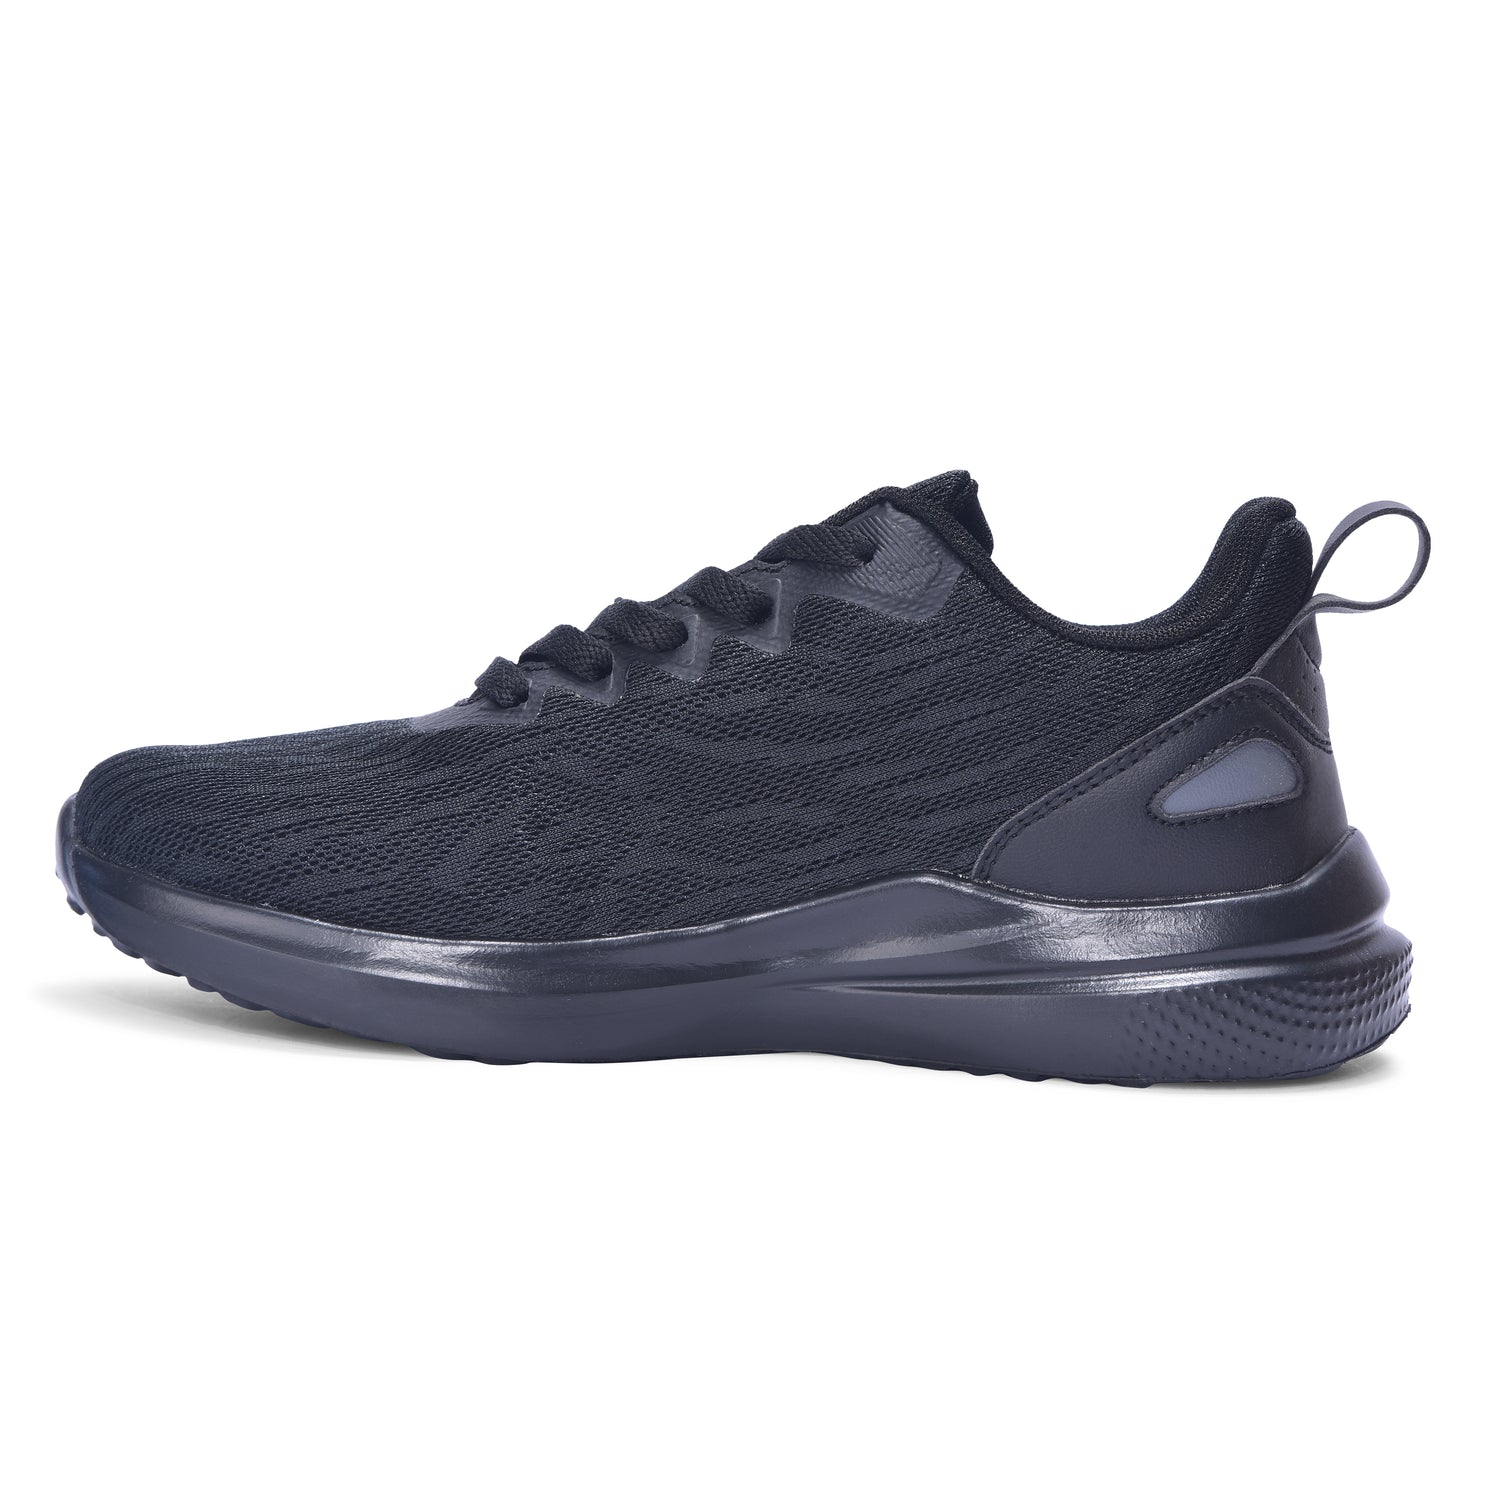 Calcetto CLT-9828 Black Grey Casual Shoe For Women